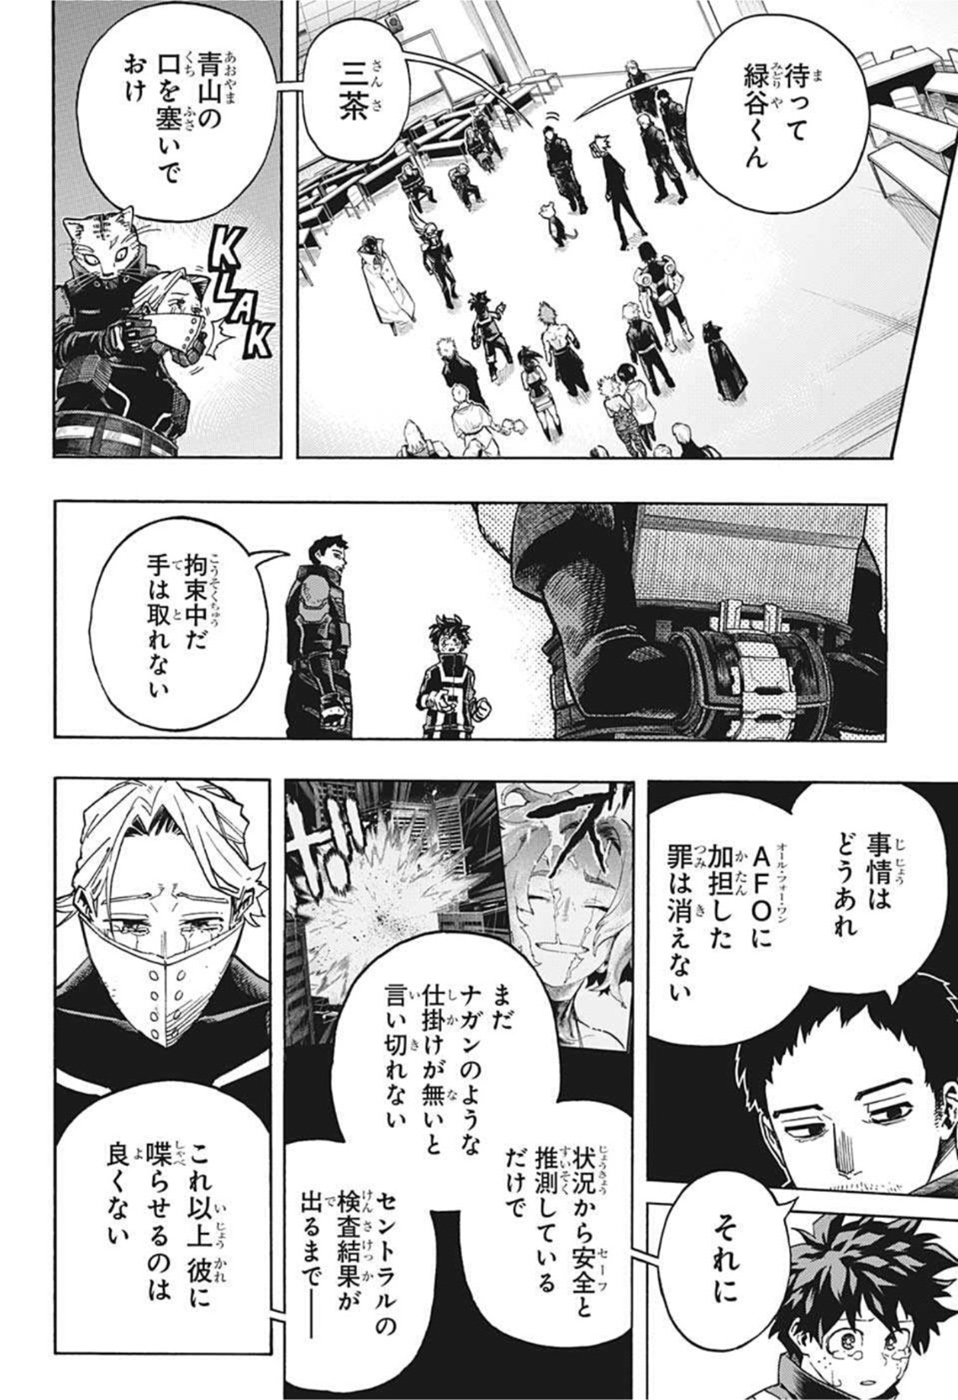 Boku no Hero Academia - Chapter 338 - Page 2